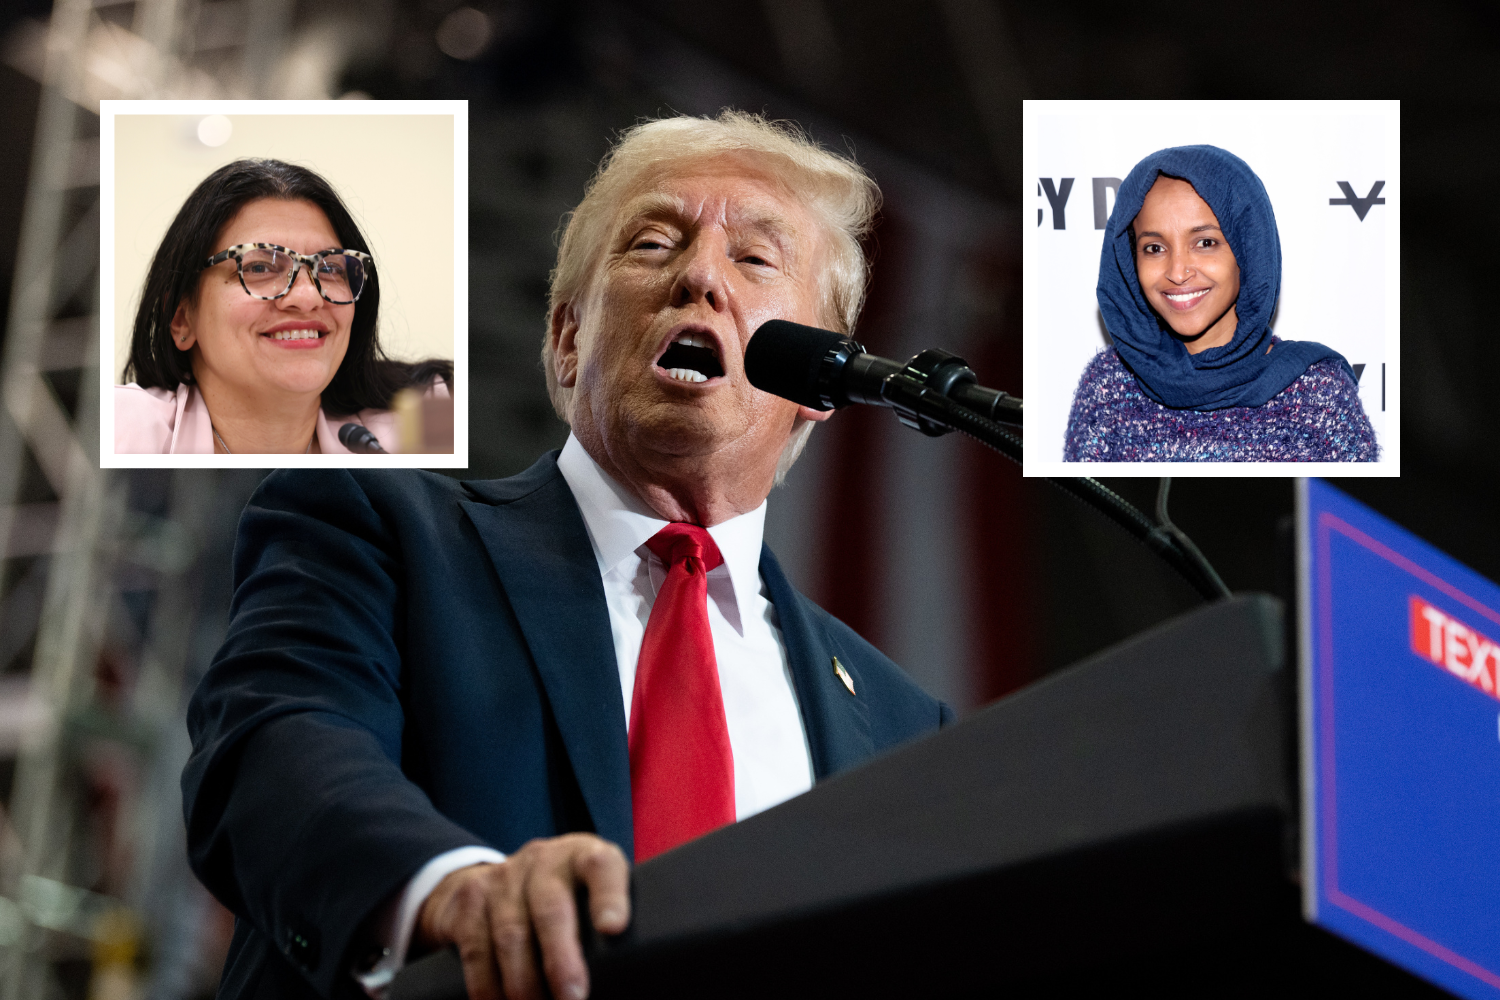 Donald Trump Appears to Mix Up Ilhan Omar and Rashida Tlaib